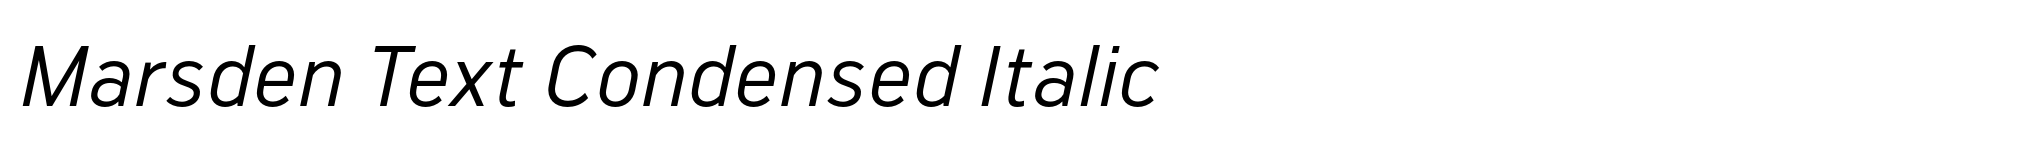 Marsden Text Condensed Italic image